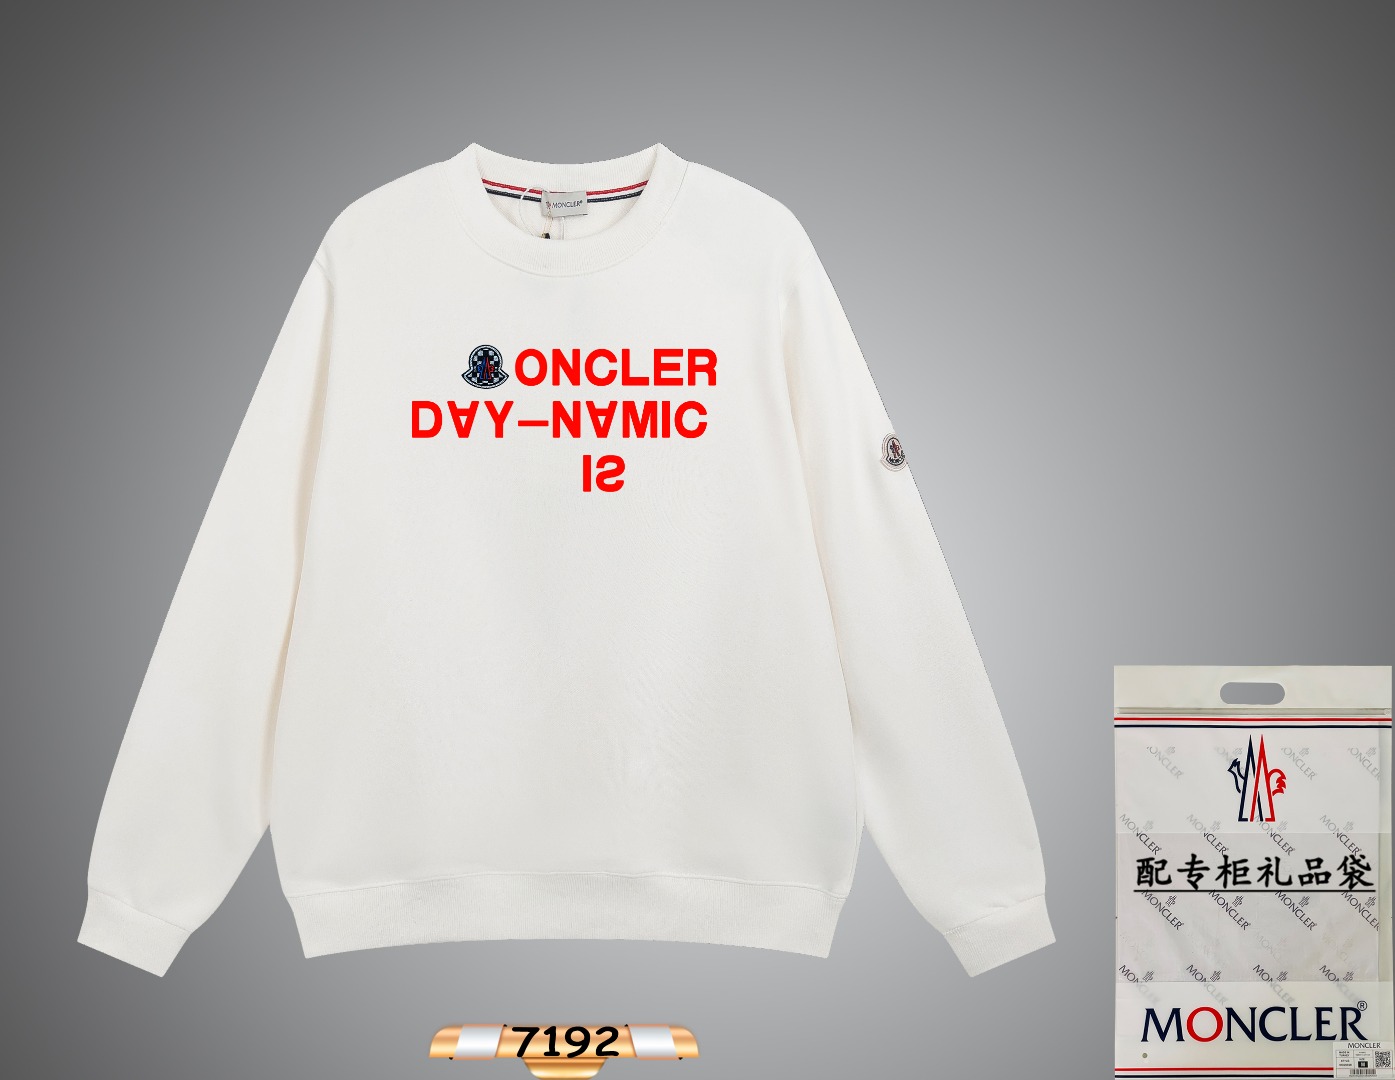 Moncler Clothing Sweatshirts Black White Printing Unisex Fall/Winter Collection Fashion